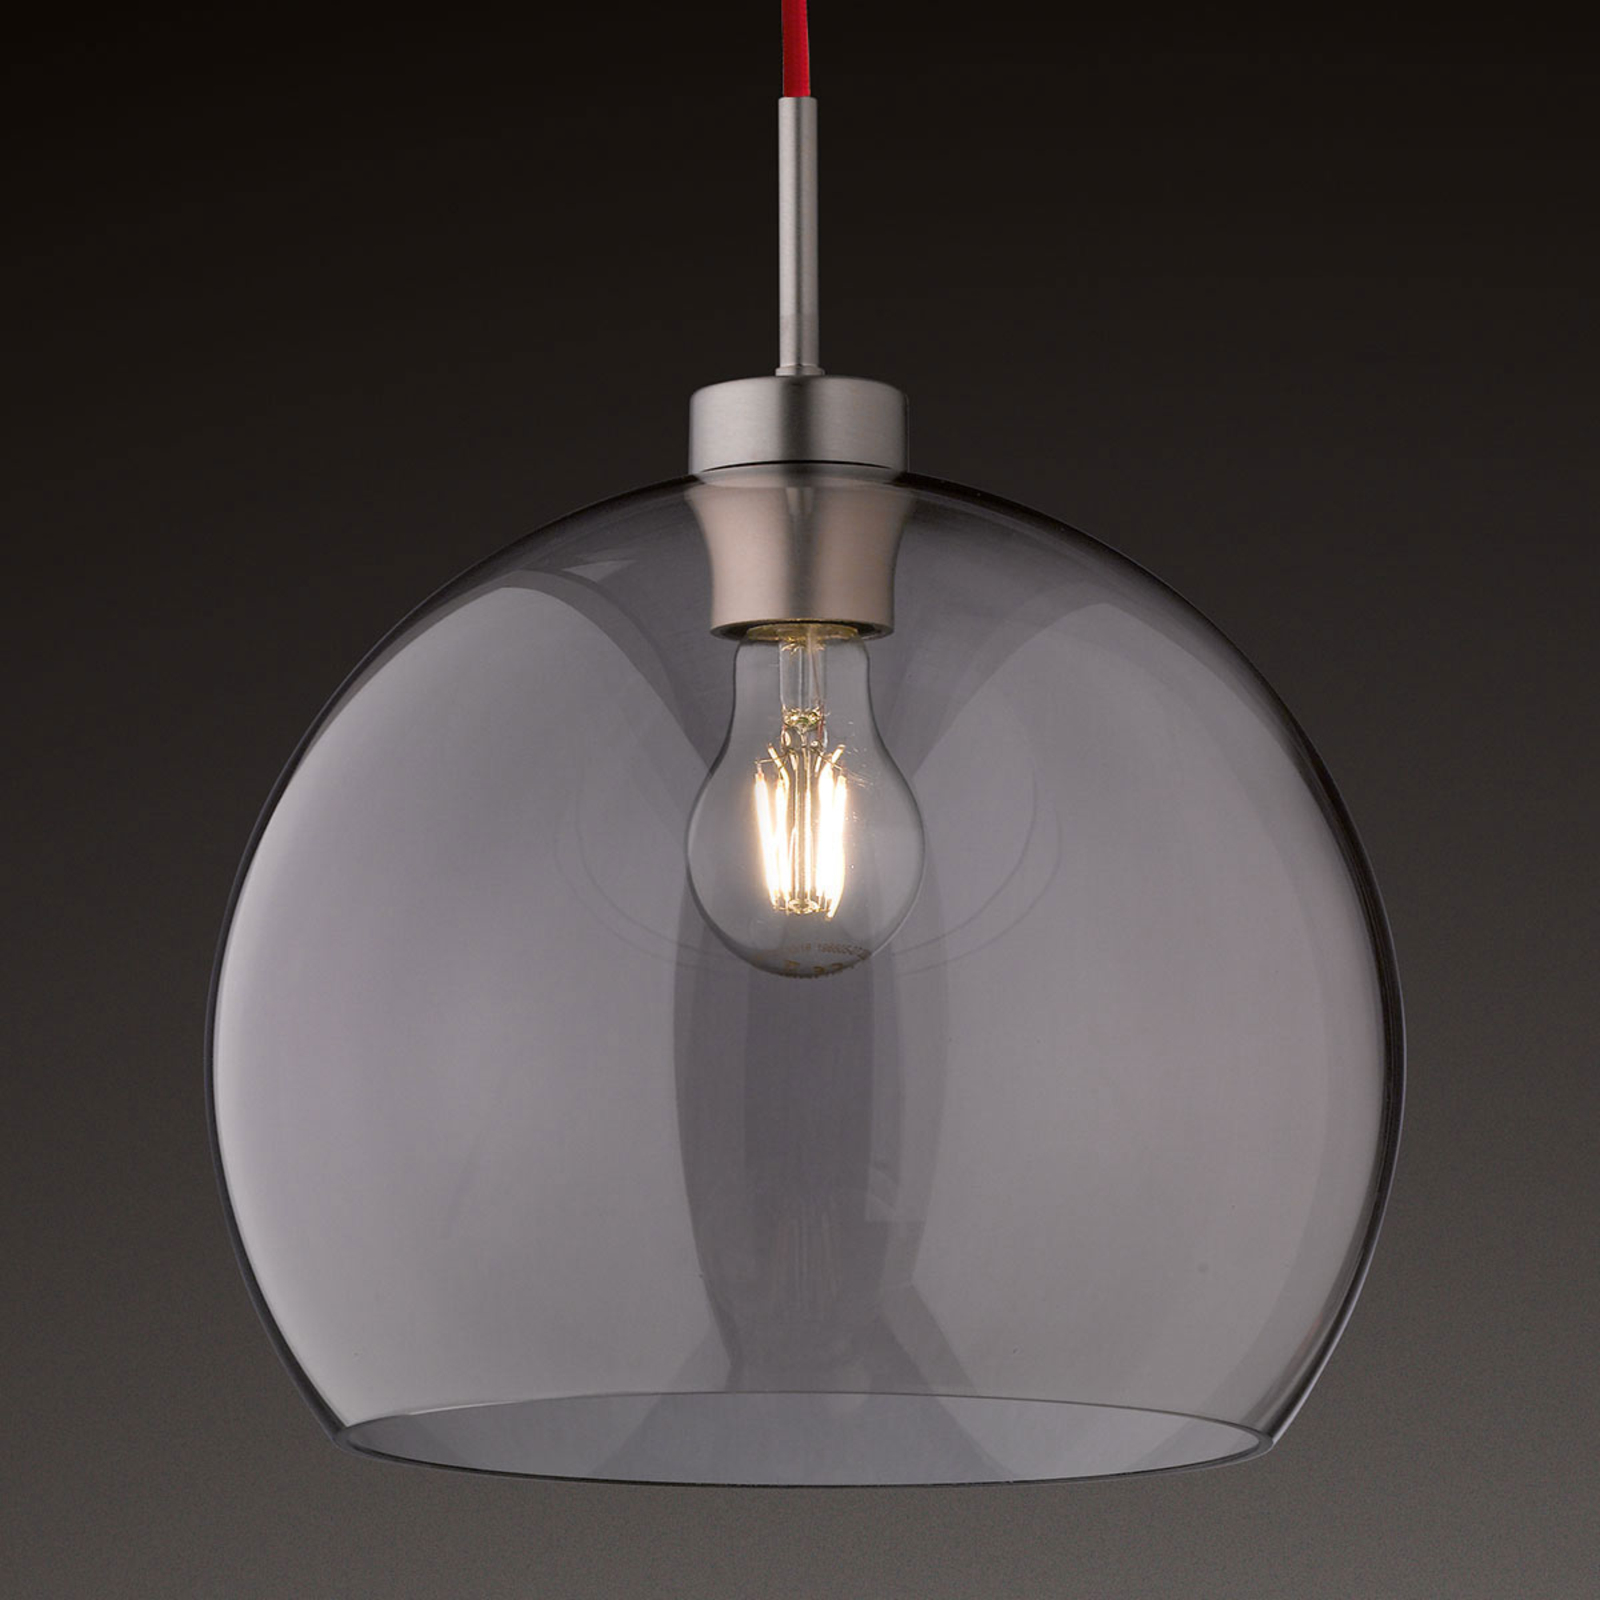 Clear glass pendant light, 30 cm